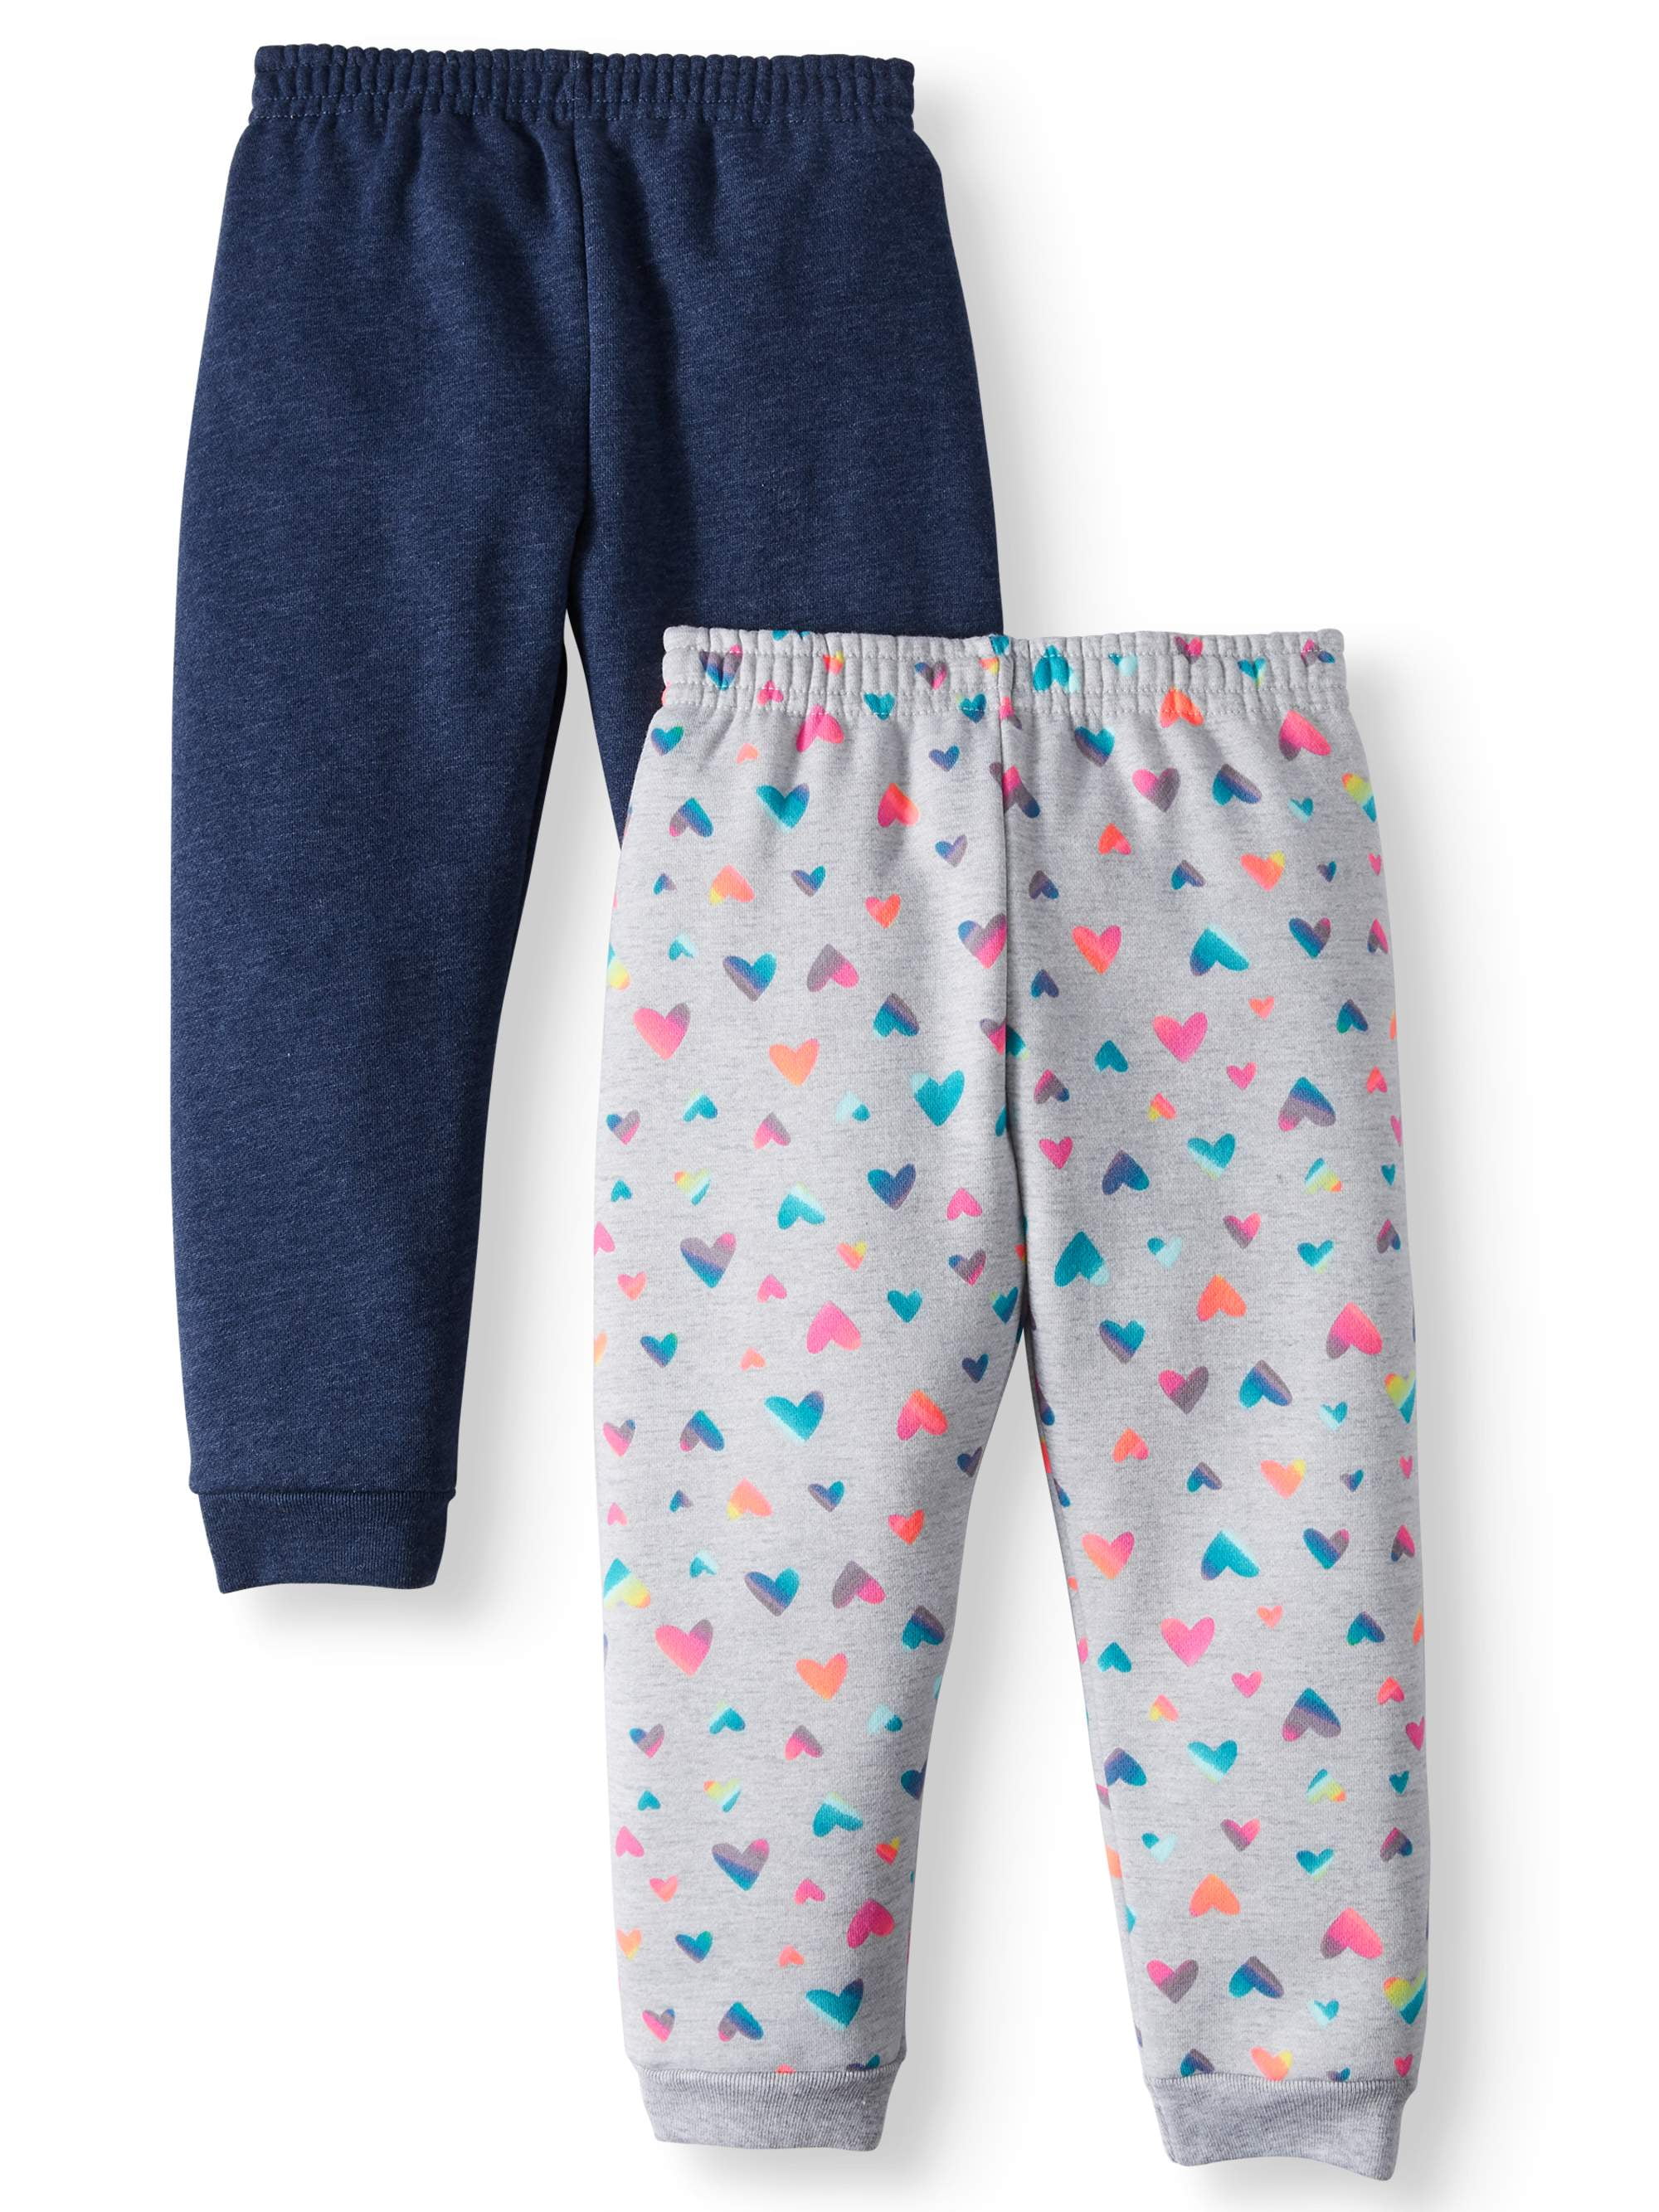 Sweatpants, 2-pack (Toddler Girls) - Walmart.com